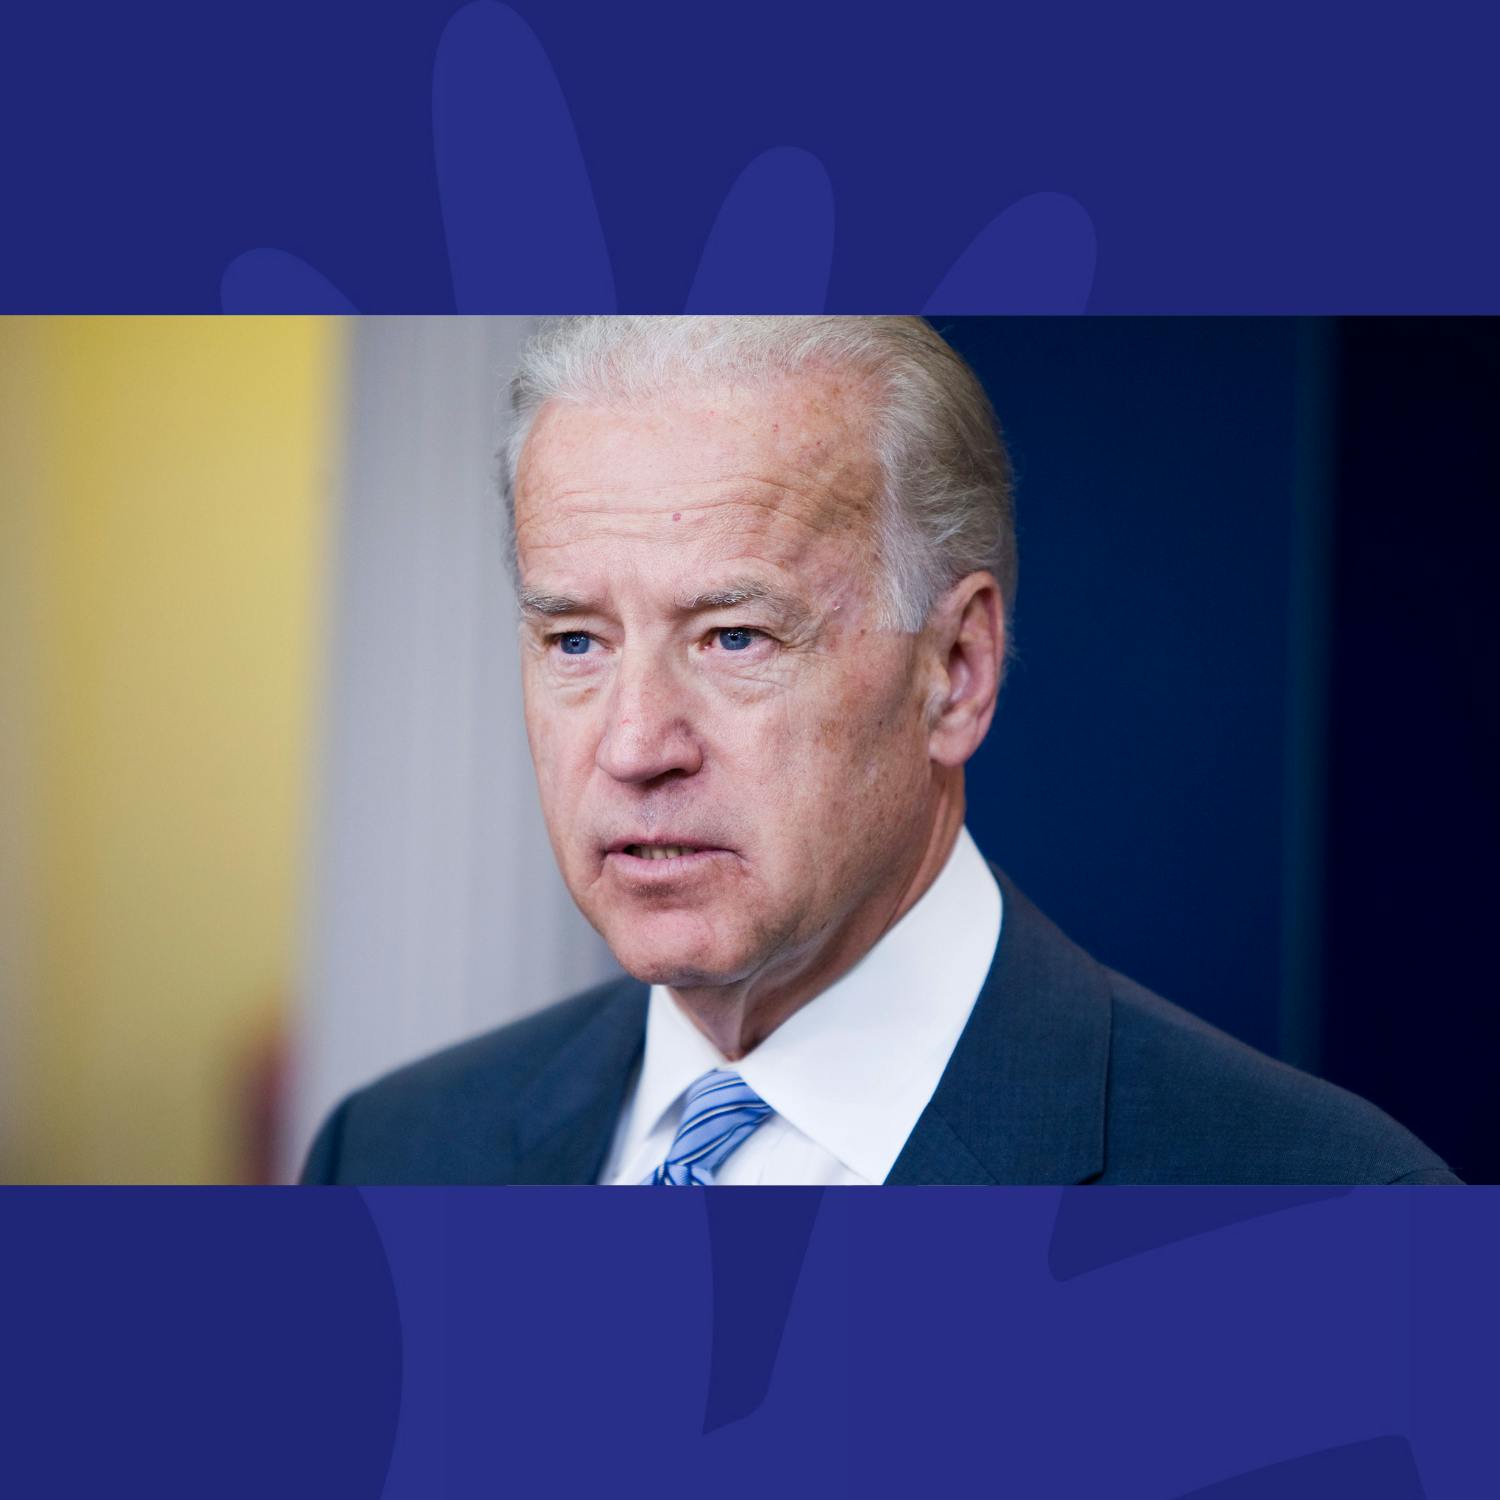 Joe Biden To Visit Israel Tomorrow